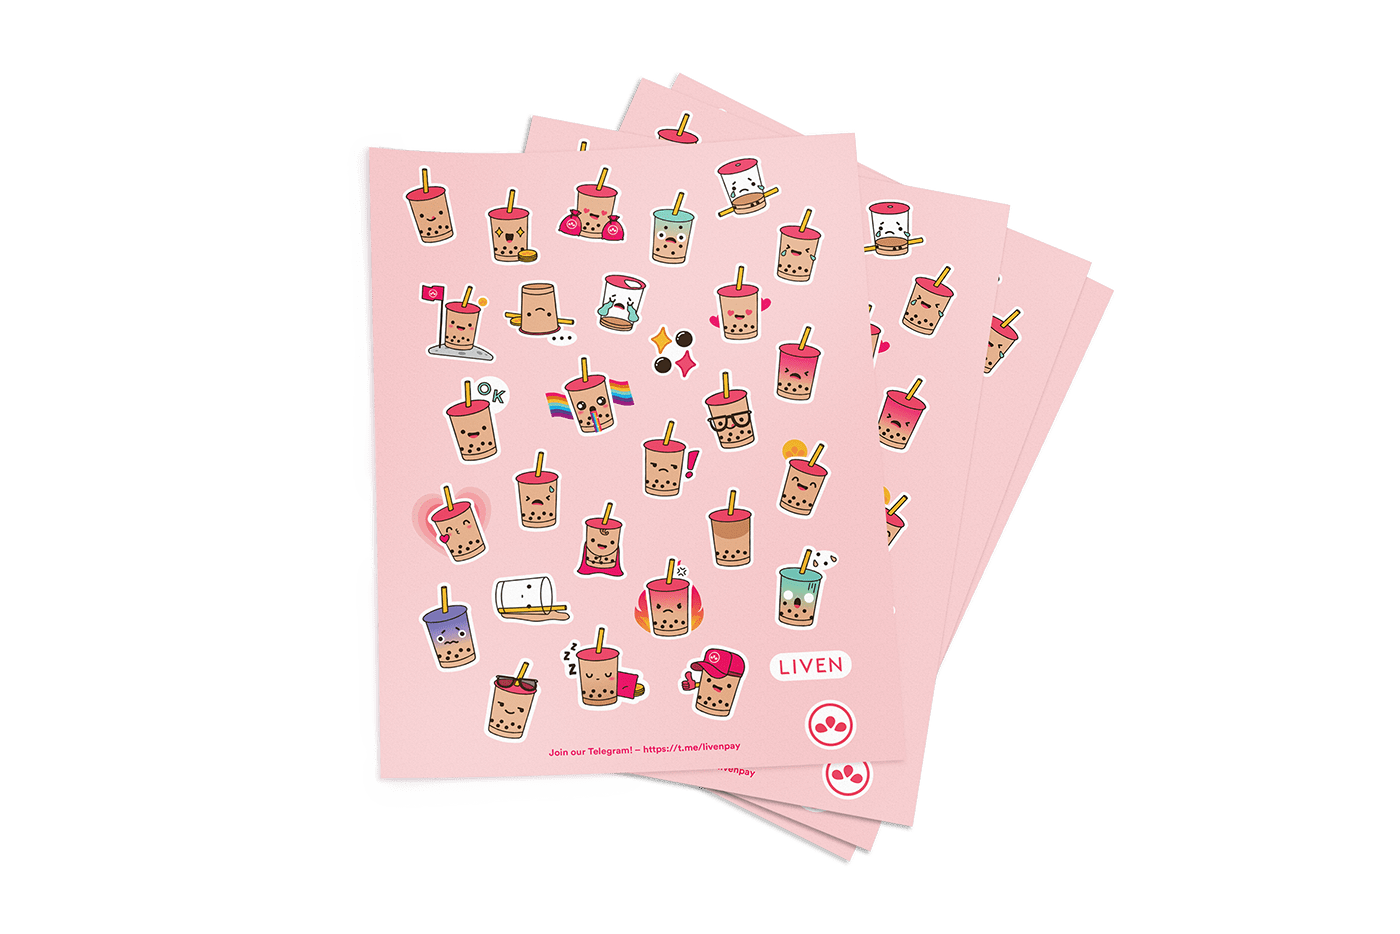 Boba bubble tea crypto cryptocurrency Fun Liven livenpay pink stickers Telegram